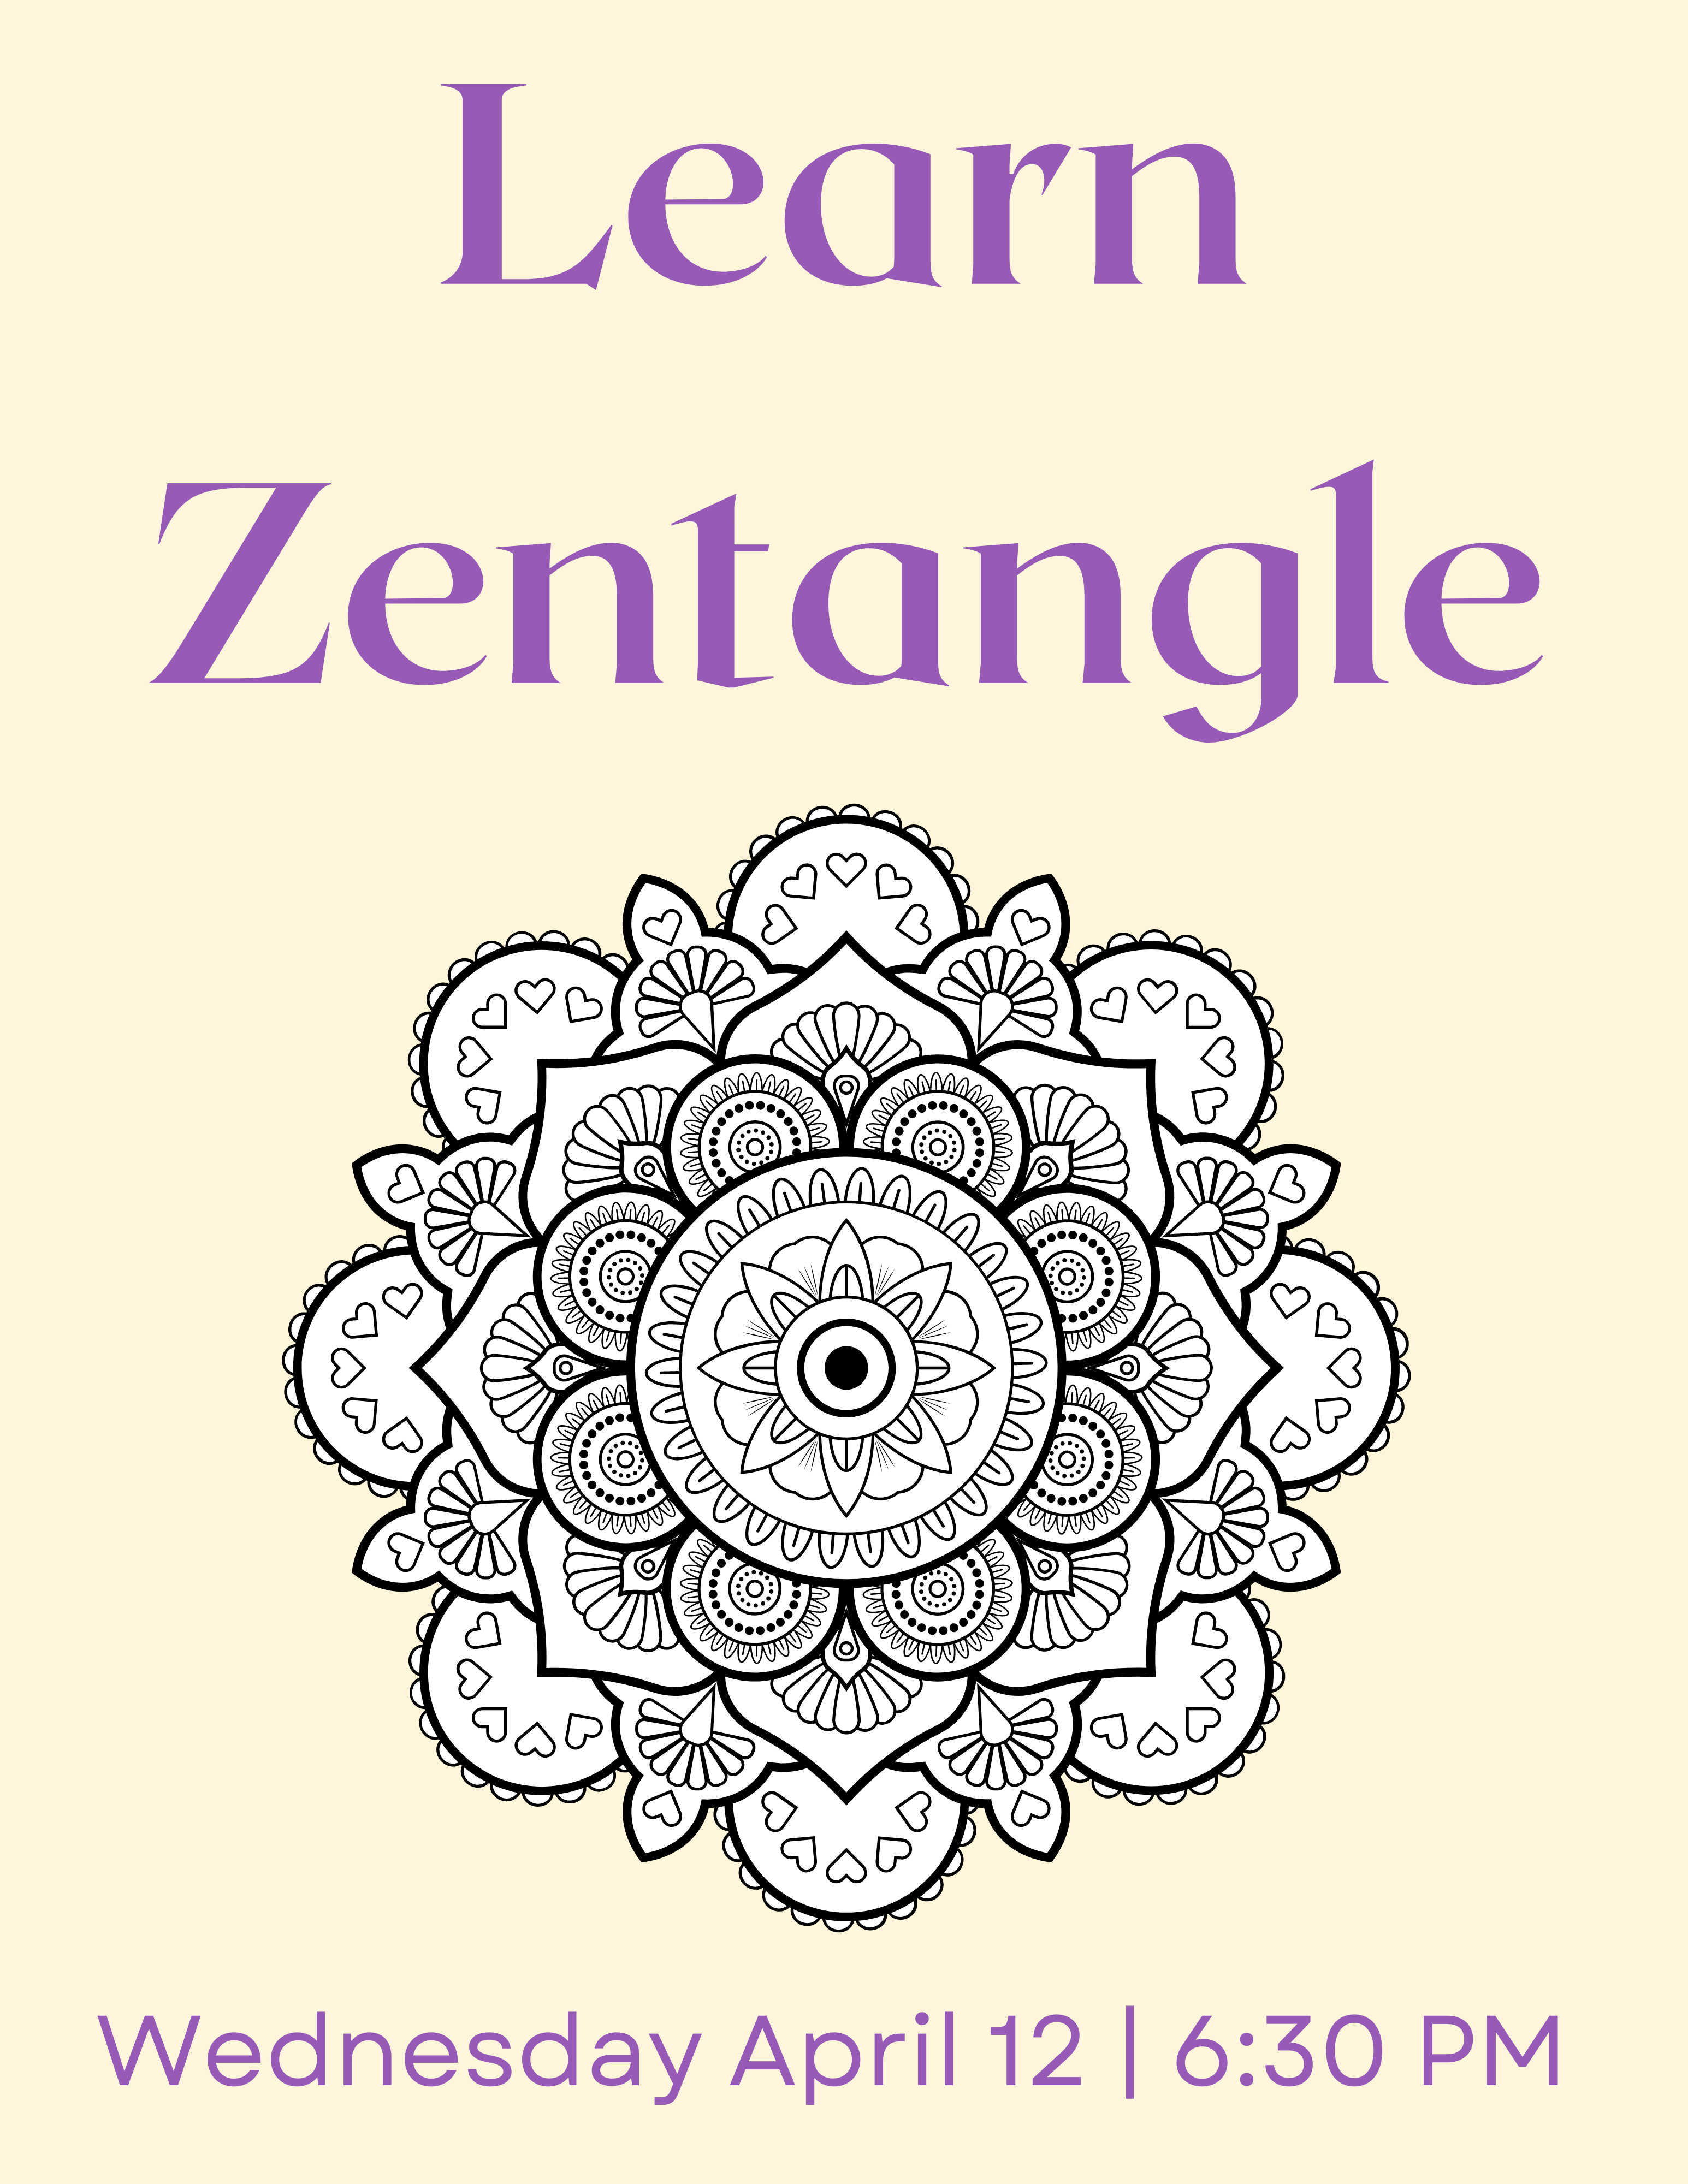 Learn Zentangle Wednesday April 12 6:30 PM Zentangle pattern